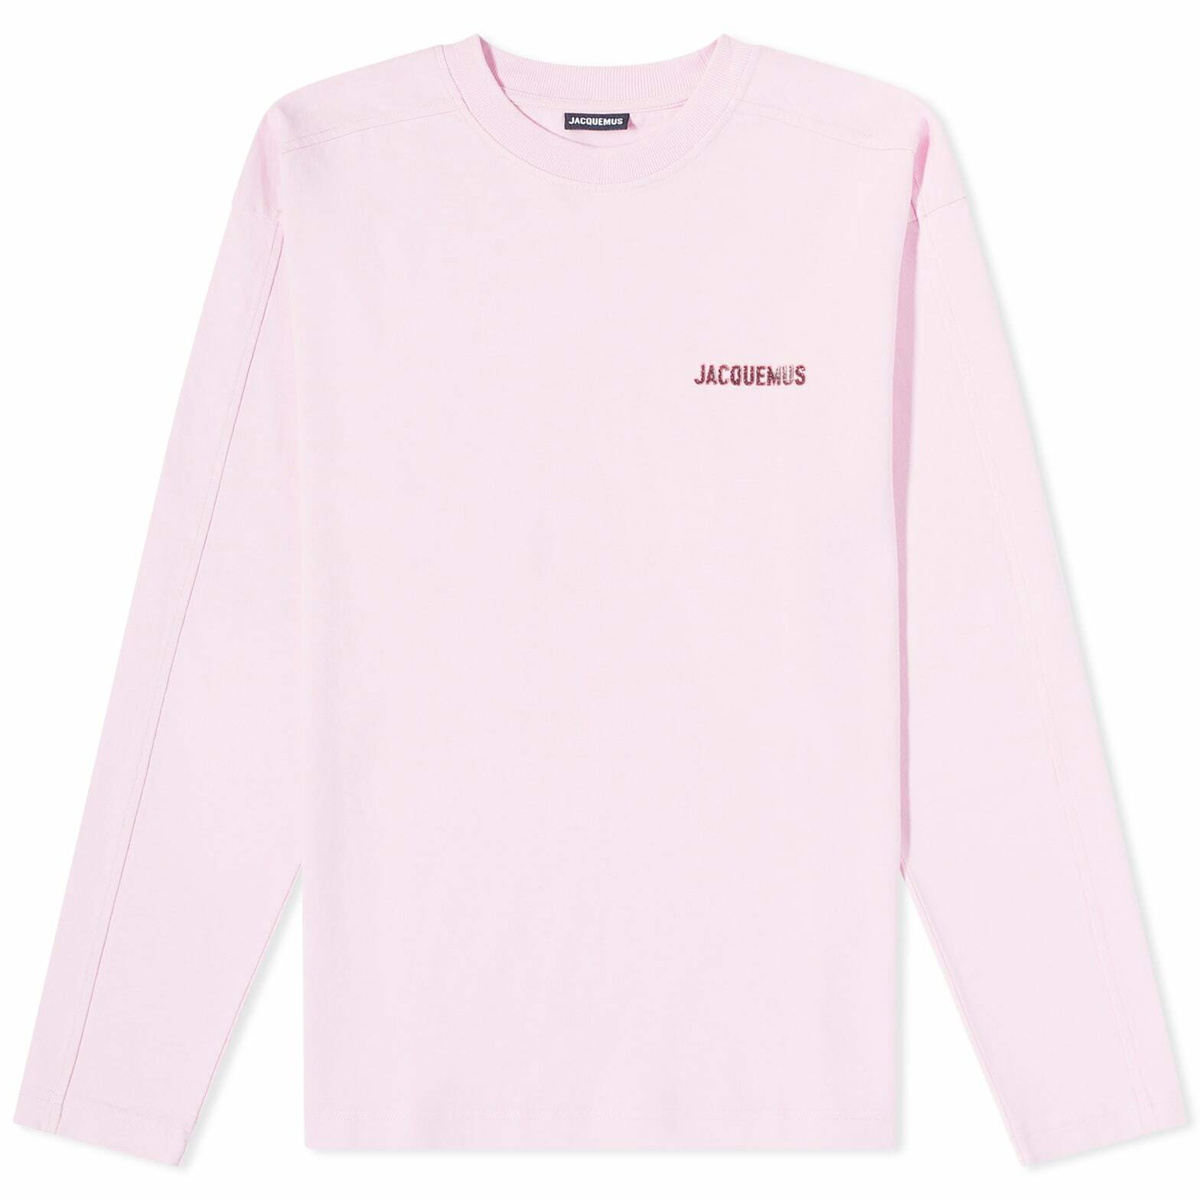 Jacquemus Men's Pavane Logo Long Sleeve T-Shirt in Pink Jelly Print ...